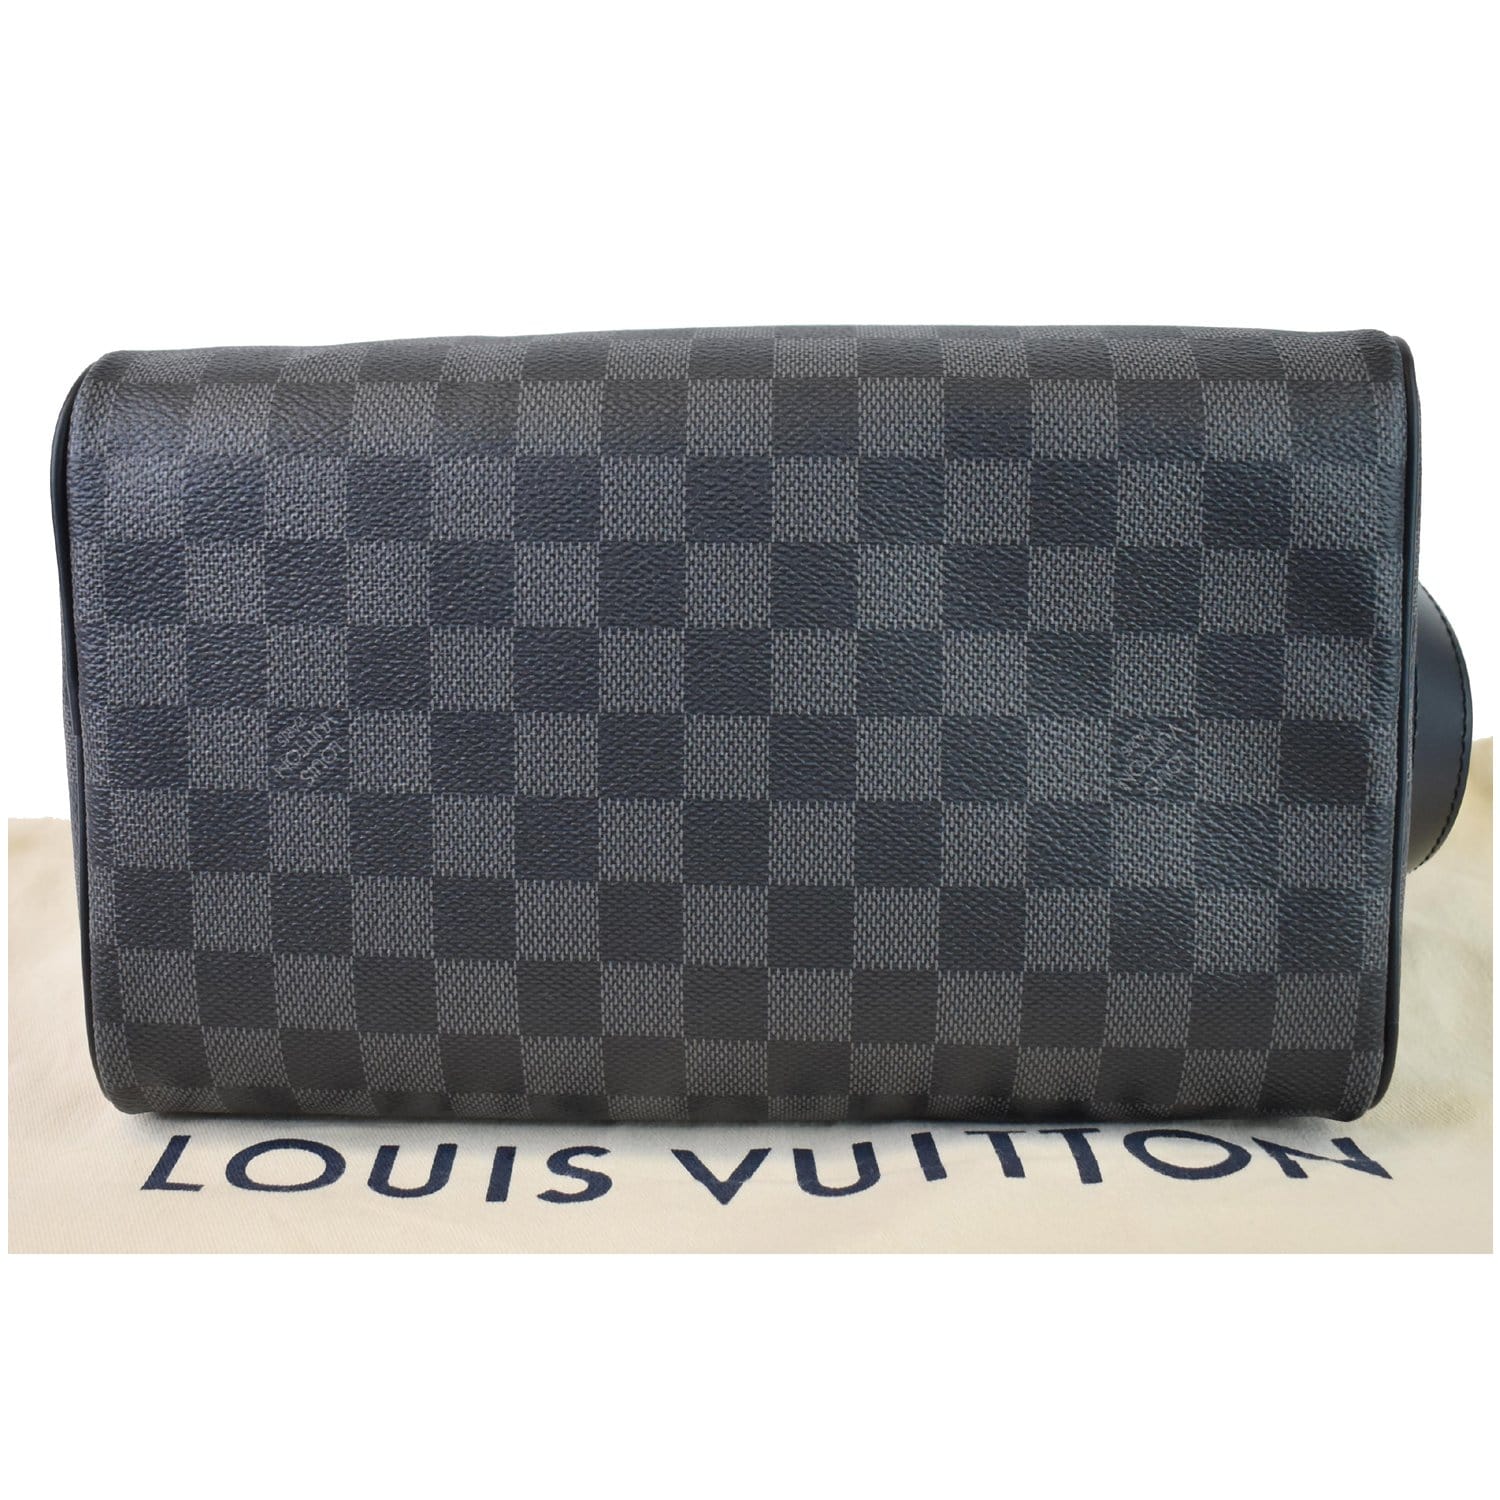 Louis Vuitton Monogram Dopp Kit Toilet Pouch, Black